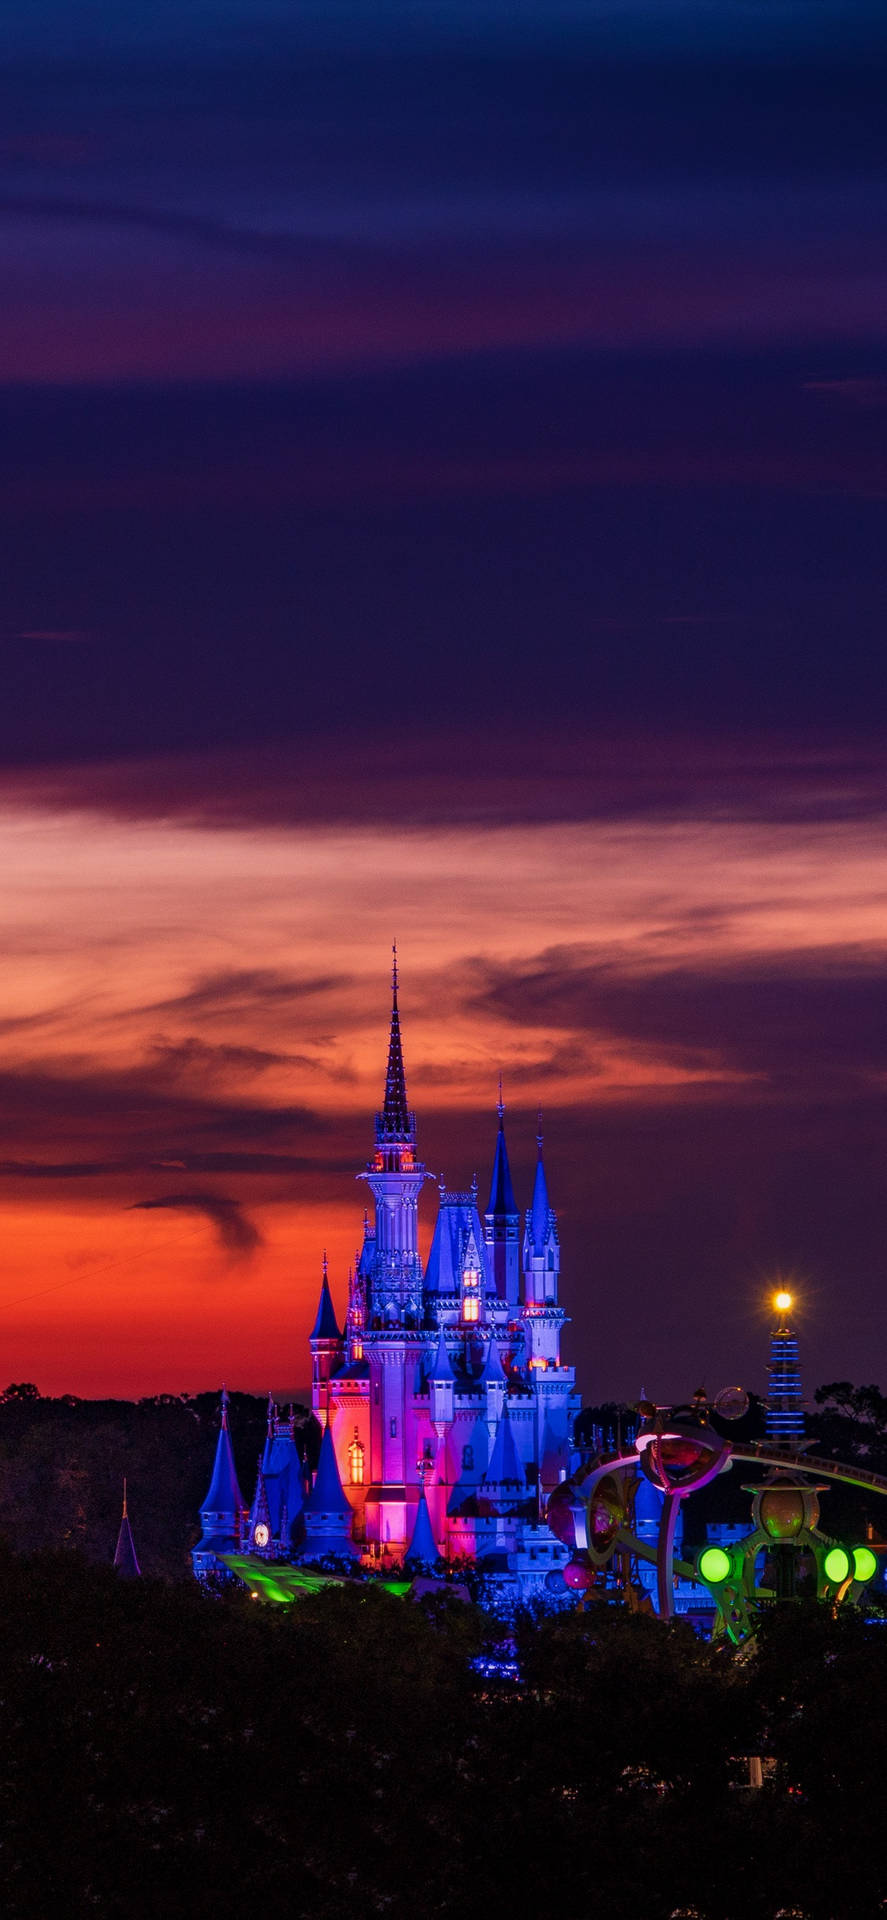 Disney Castle At Night Disney Iphone